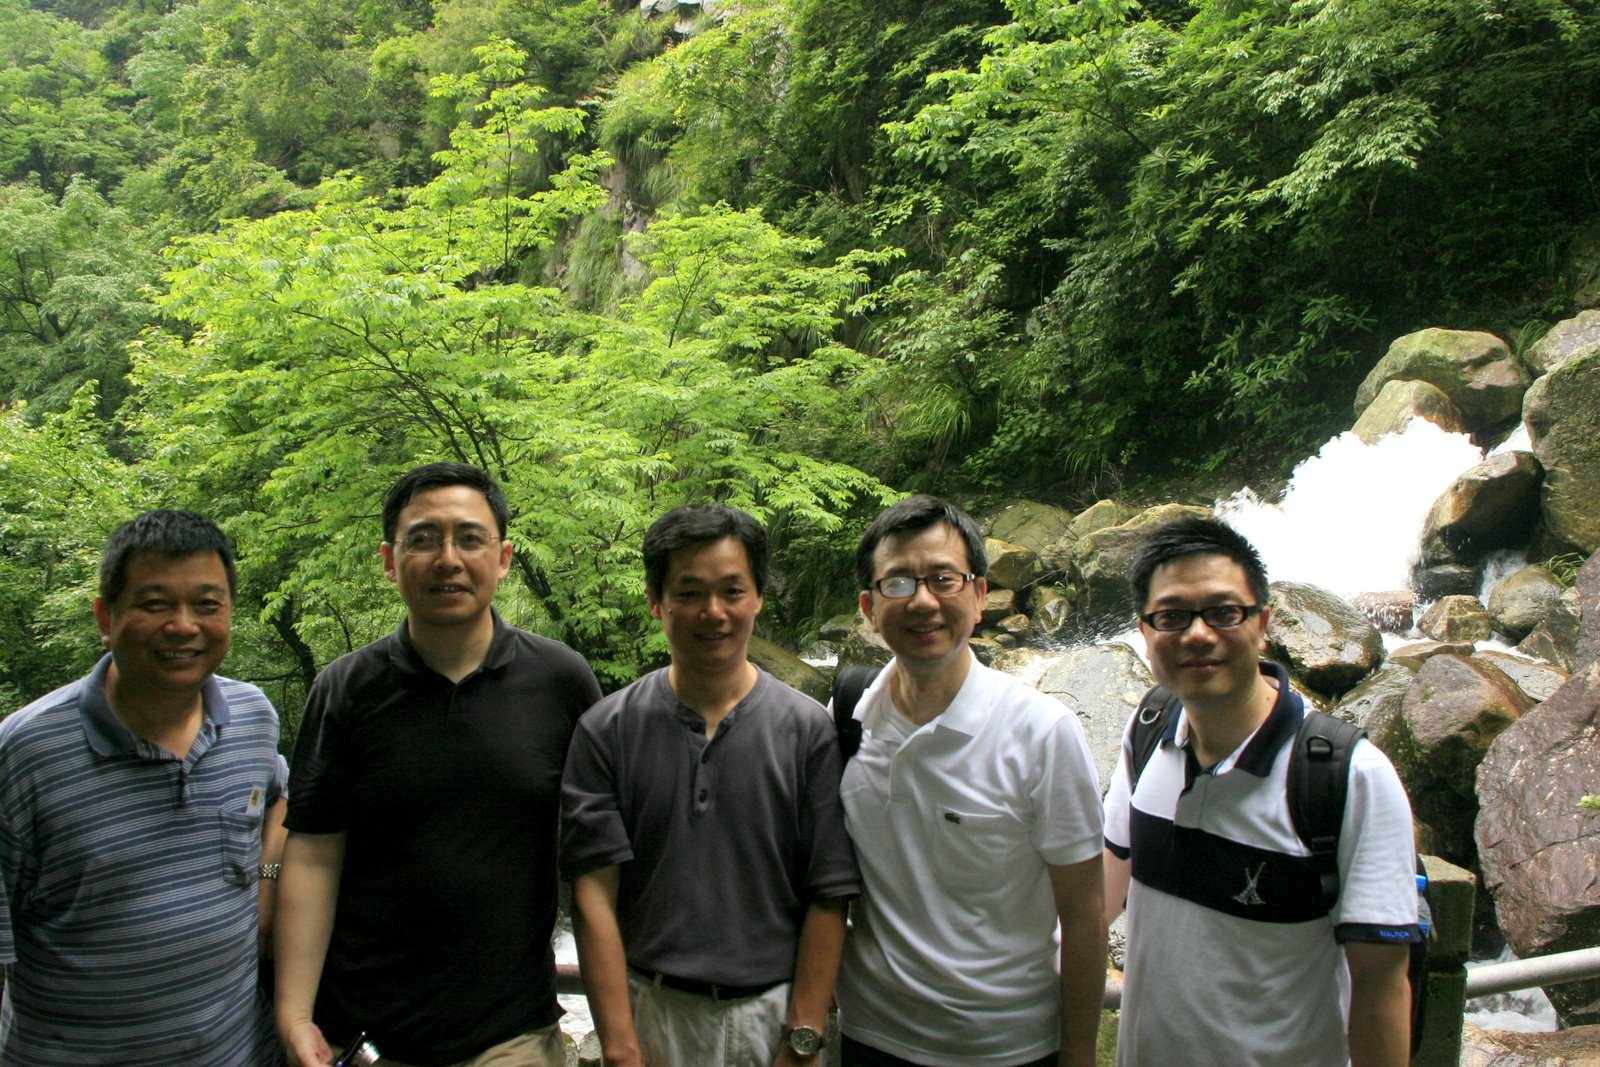 WuXi biology colleagues on a retreat in Zhejiang Province in China. From left: Xinsheng Chen, Qiang Lü, Henry Lu, Chichang Chan, and James Wu.